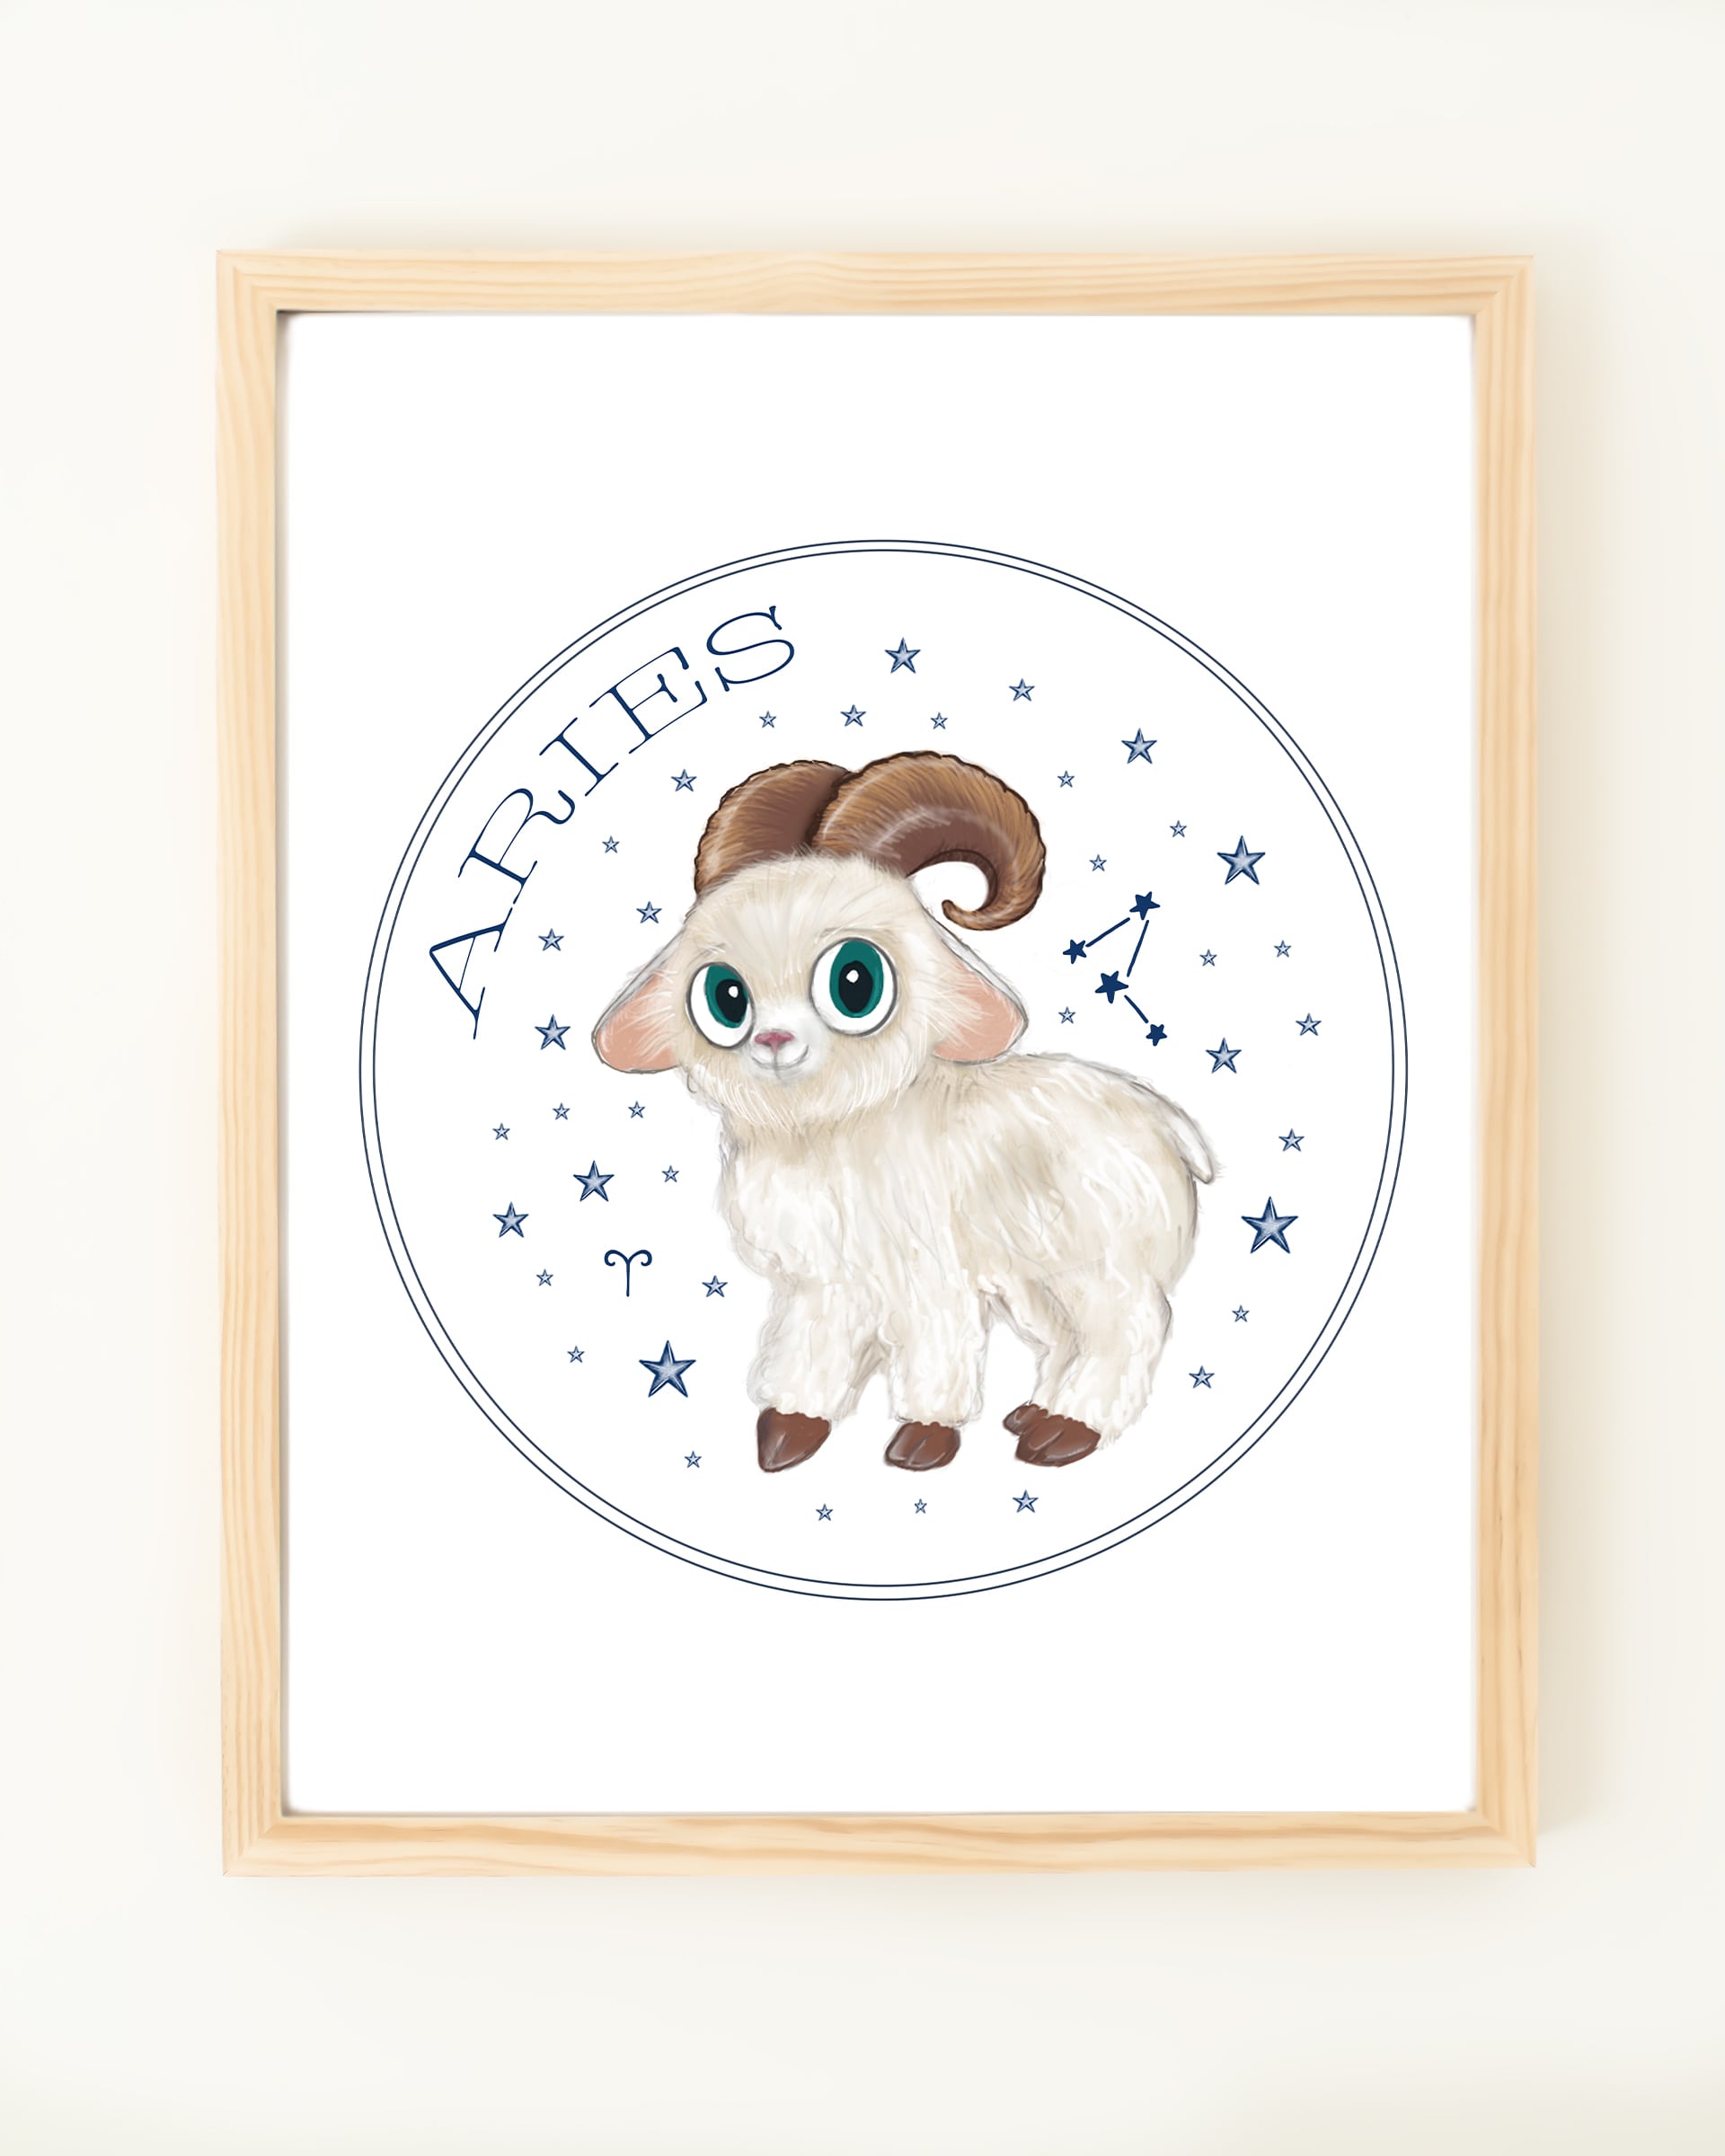 Framed hand drawn stars zodiac nursery decor wall art poster Aries cute baby animal farm sheep 